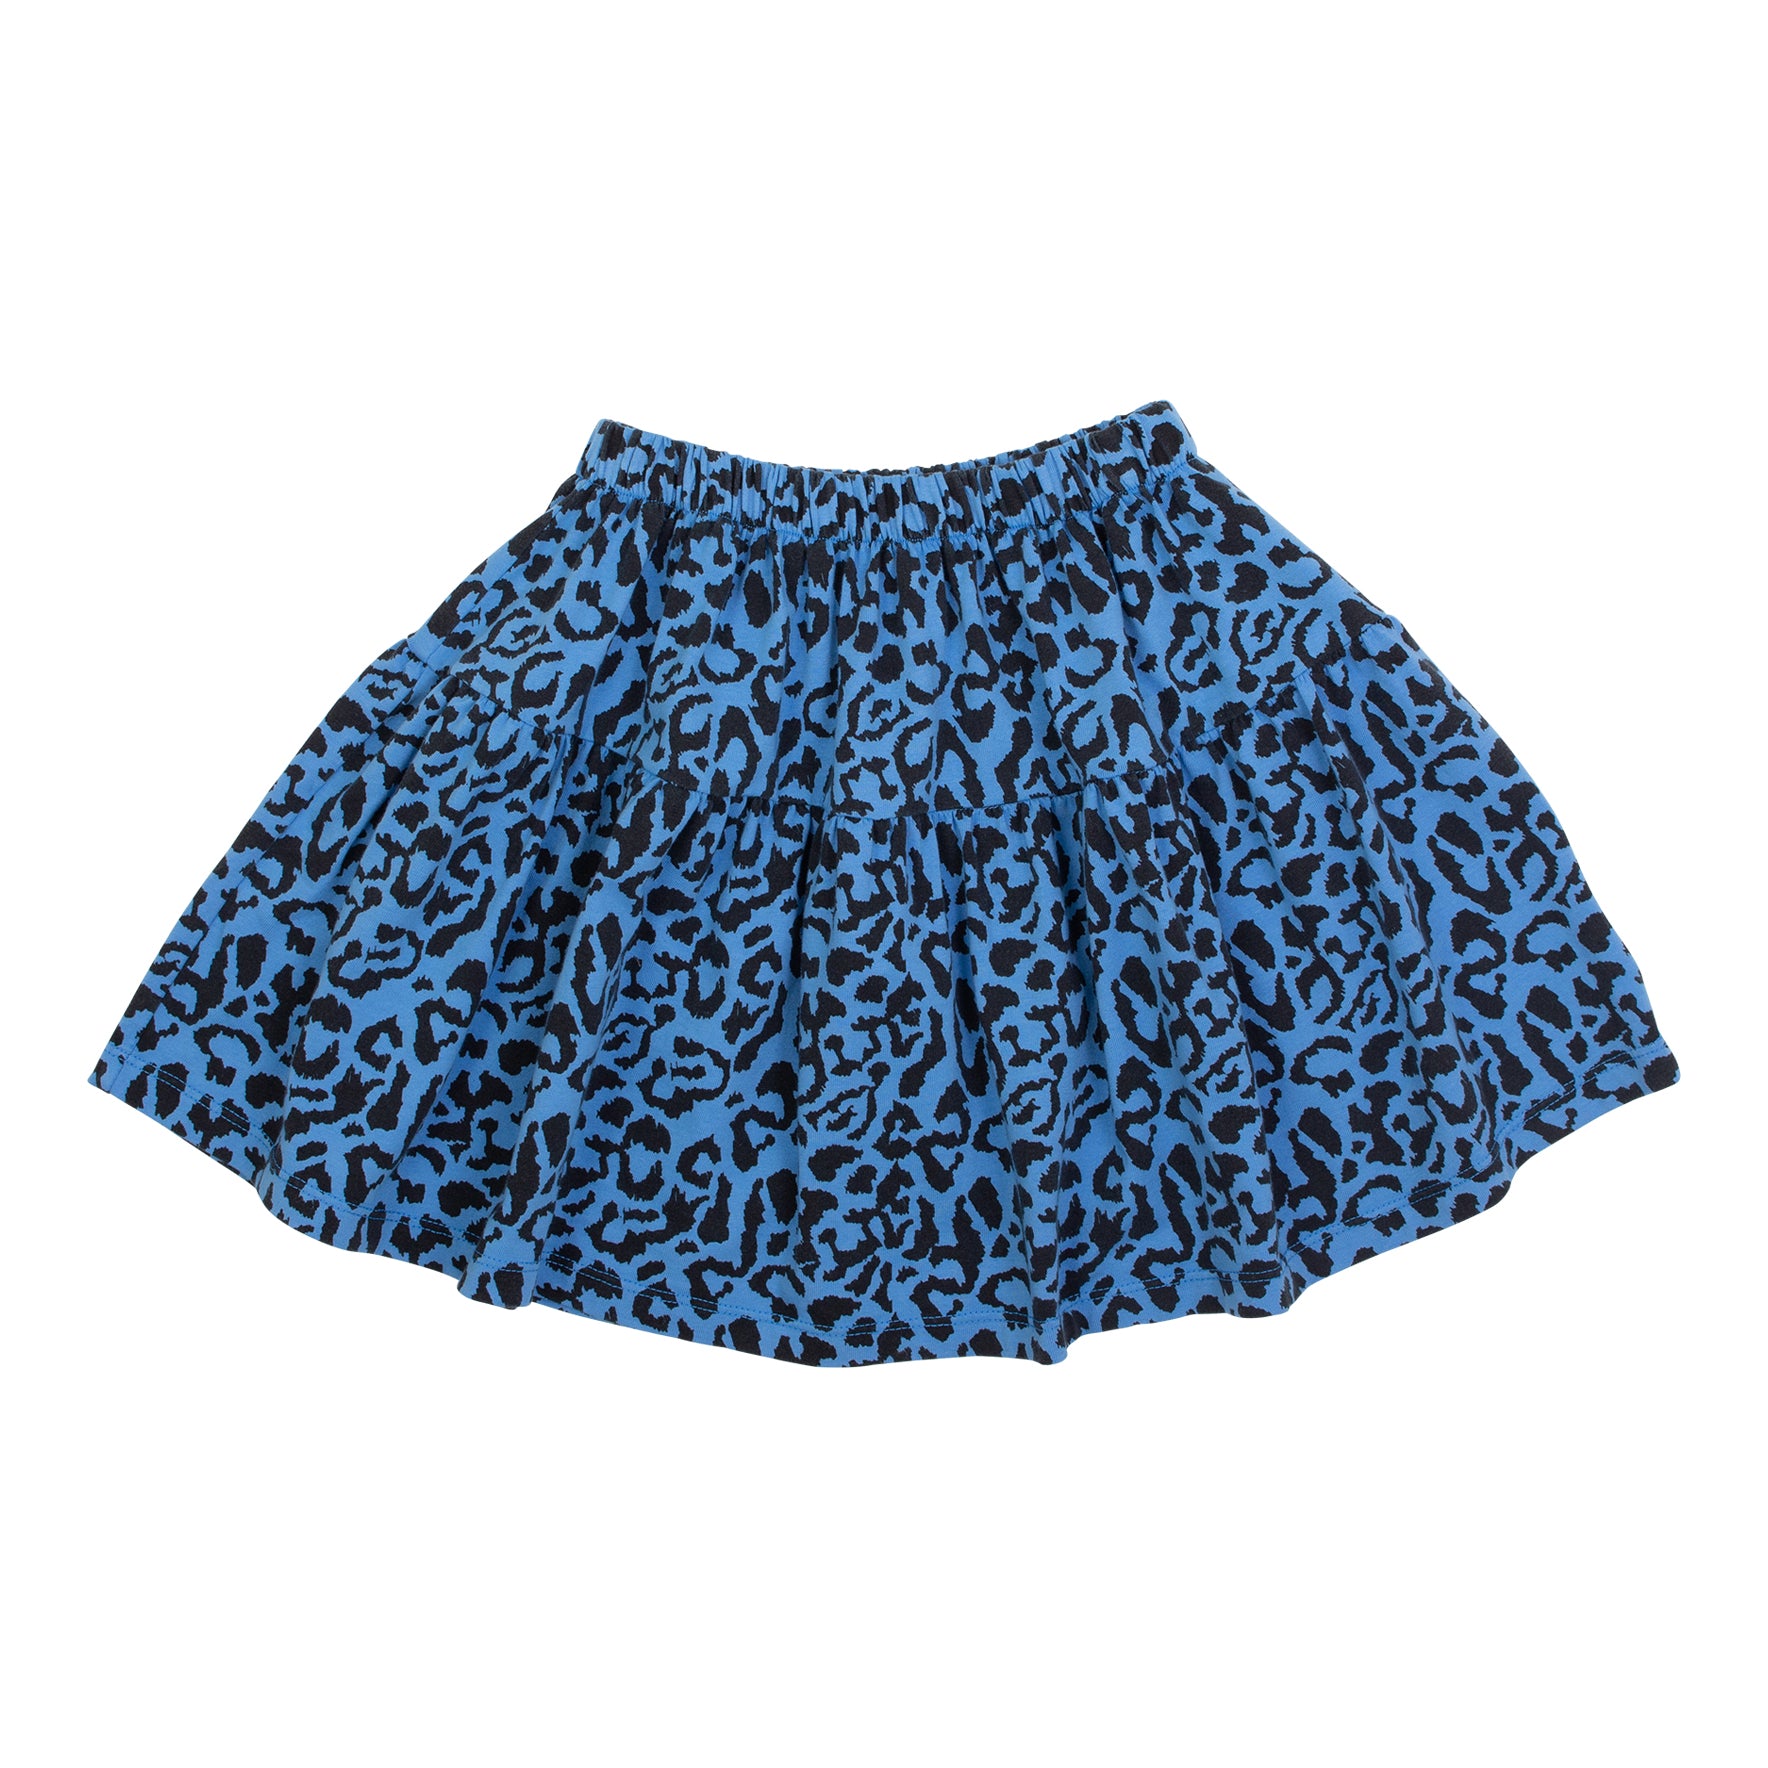 Stelle Animal Skirt - Circus Blue Animal Print